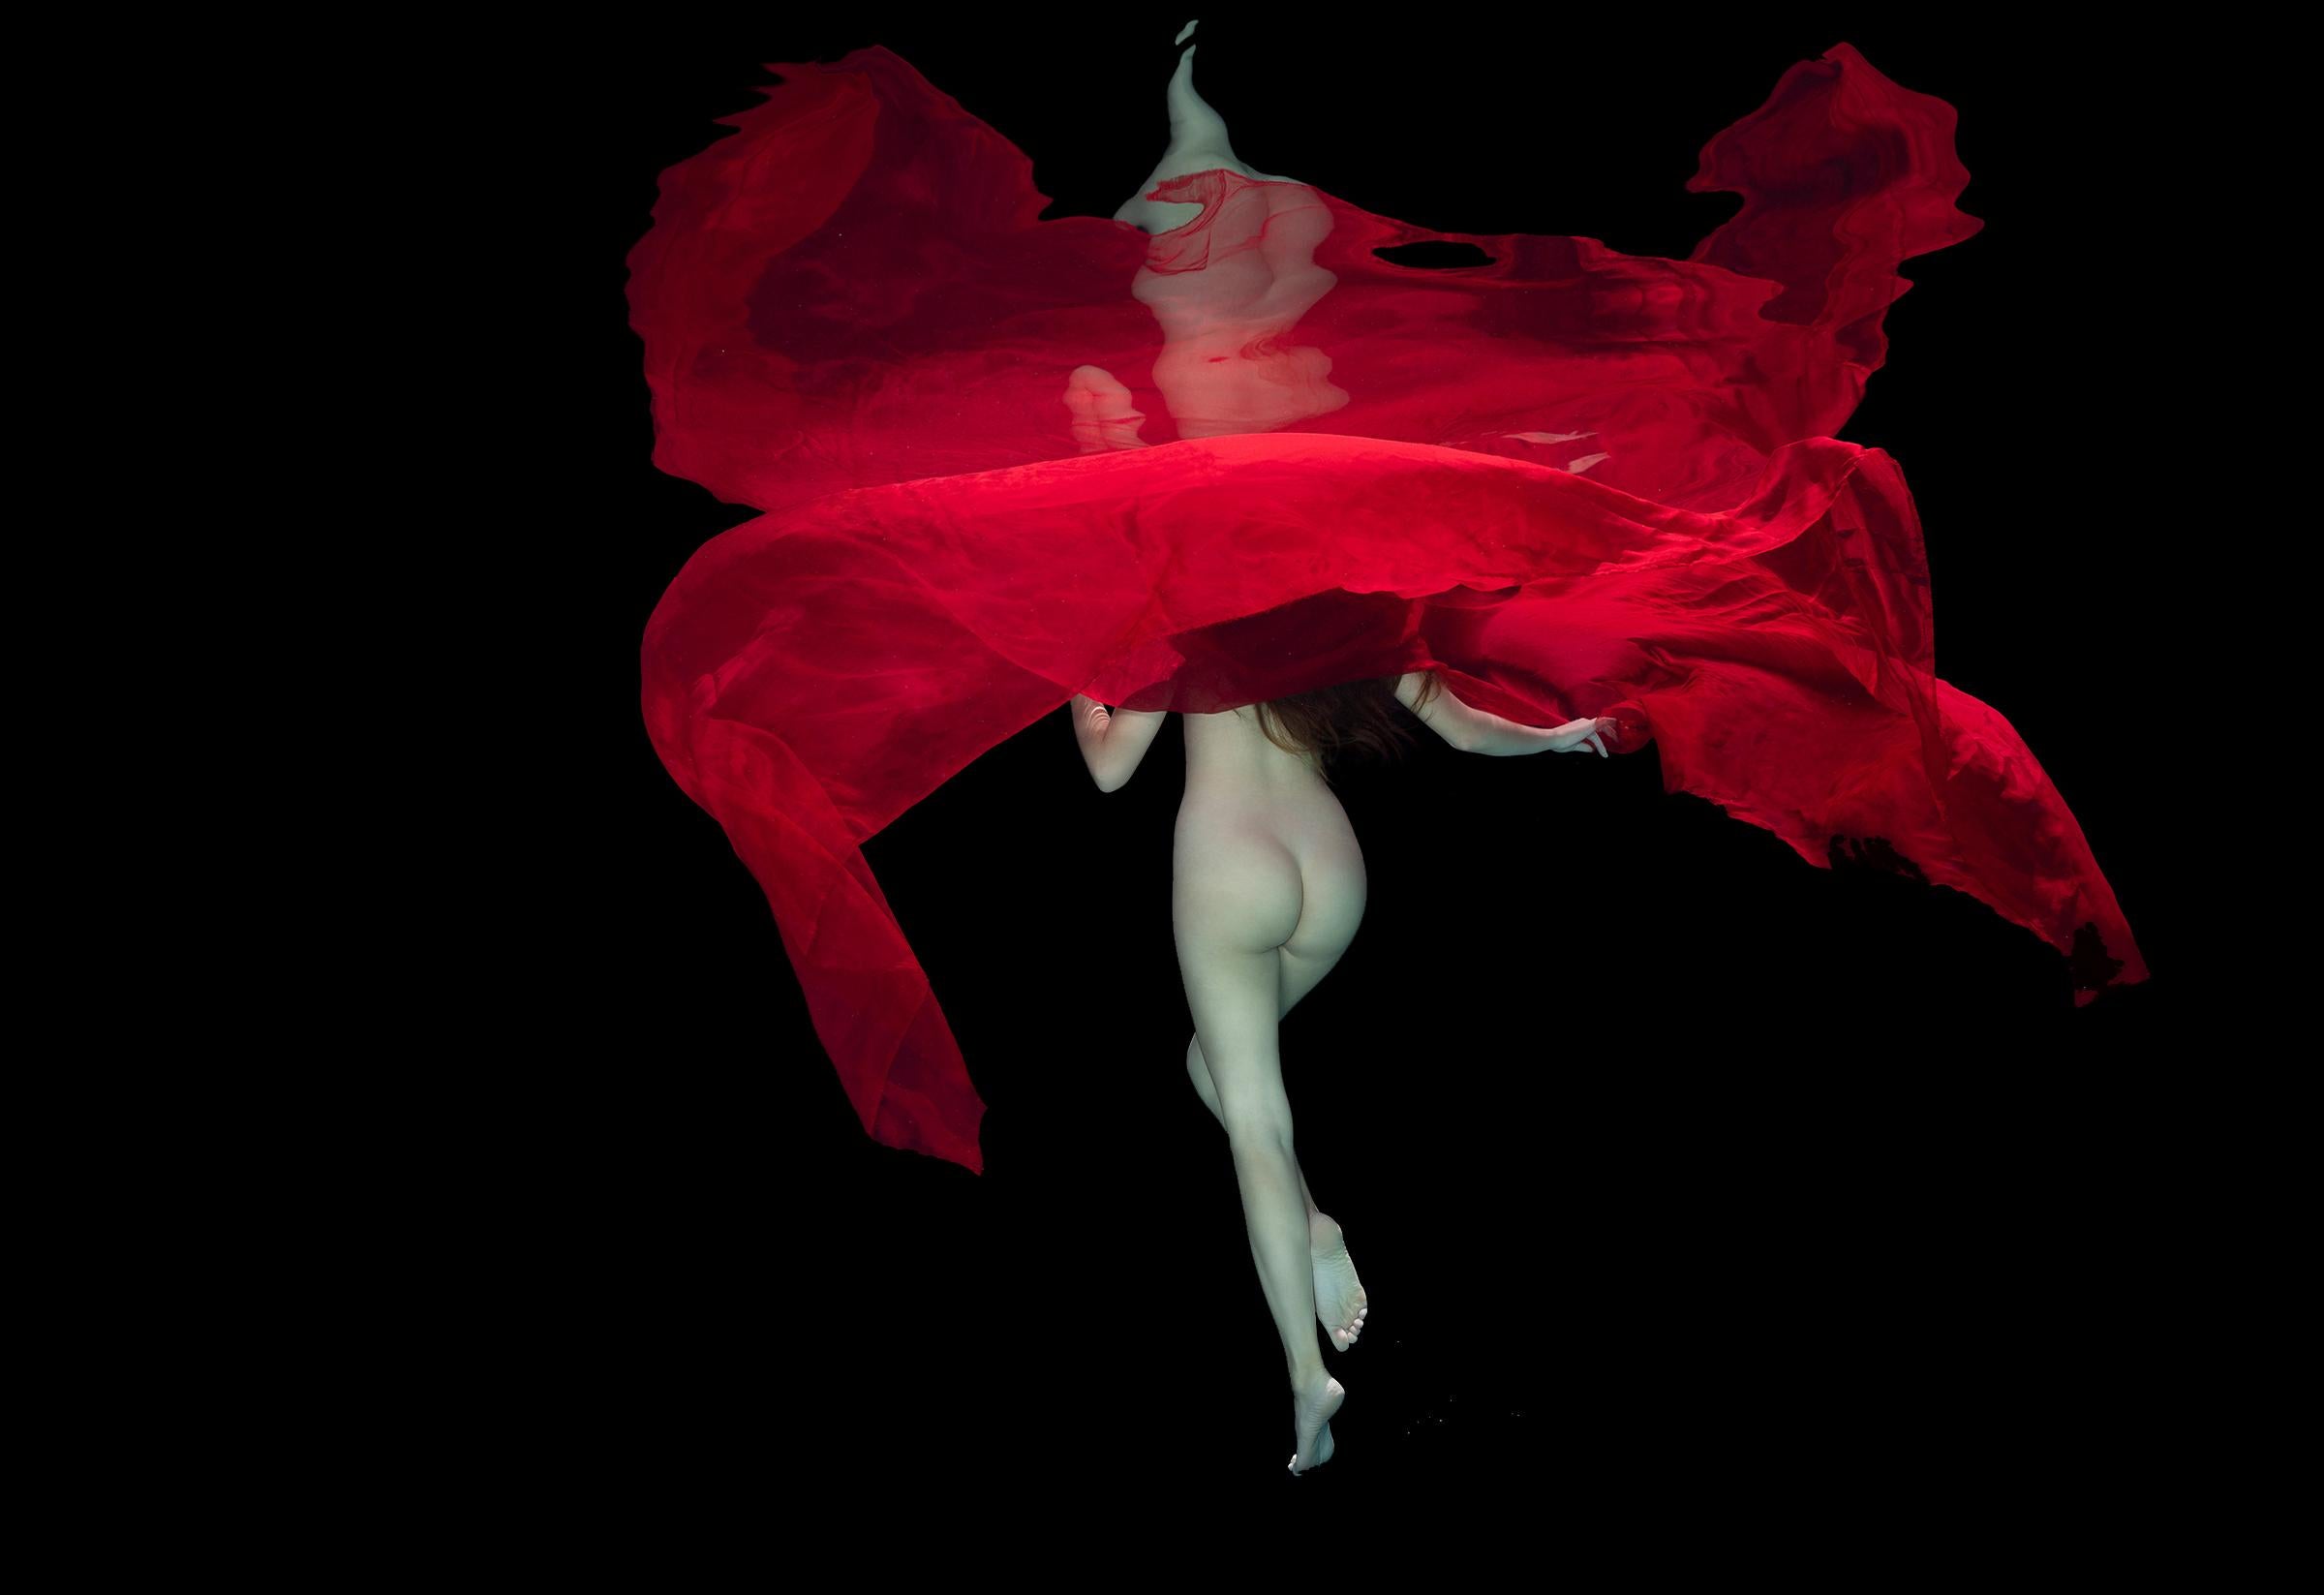 Alex Sher Figurative Photograph - Hibiscus - underwater nude photograph - archival pigment print 43" х 64"